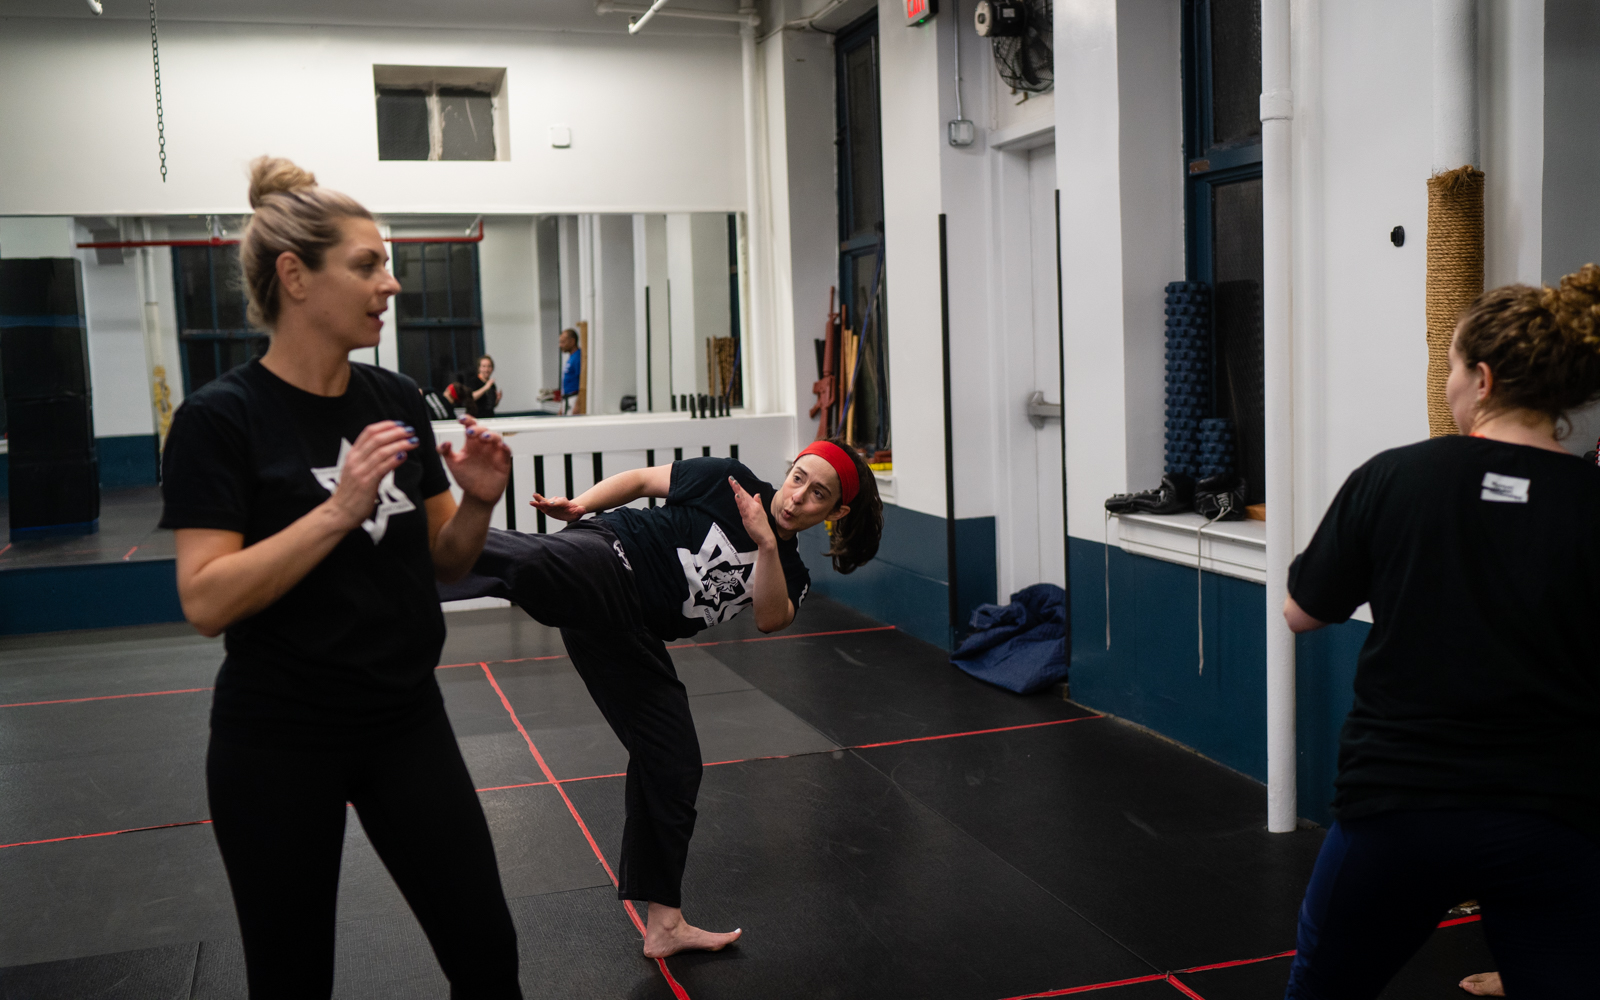 Students train Krav Maga through the Legion Self Defense program in New York City. (Luke Tress/Times of Israel)